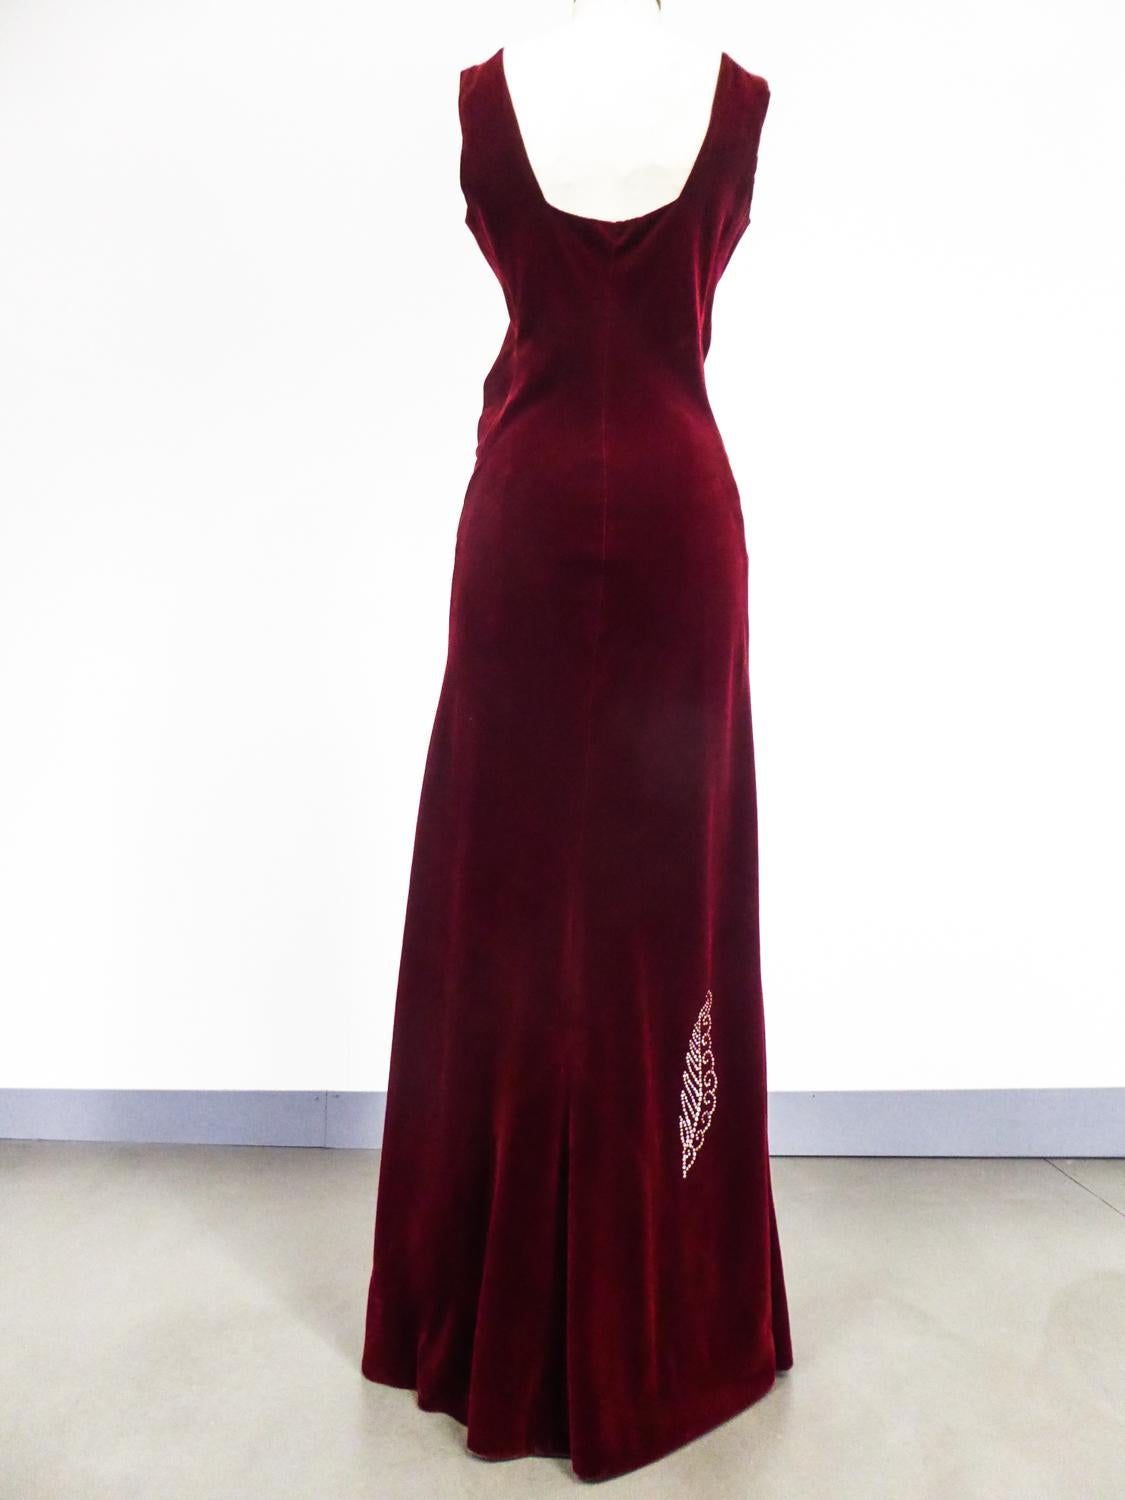 A Nicole Groult / Paul Poiret Evening Dress in Velvet and Rhinestones Circa 1935 For Sale 3